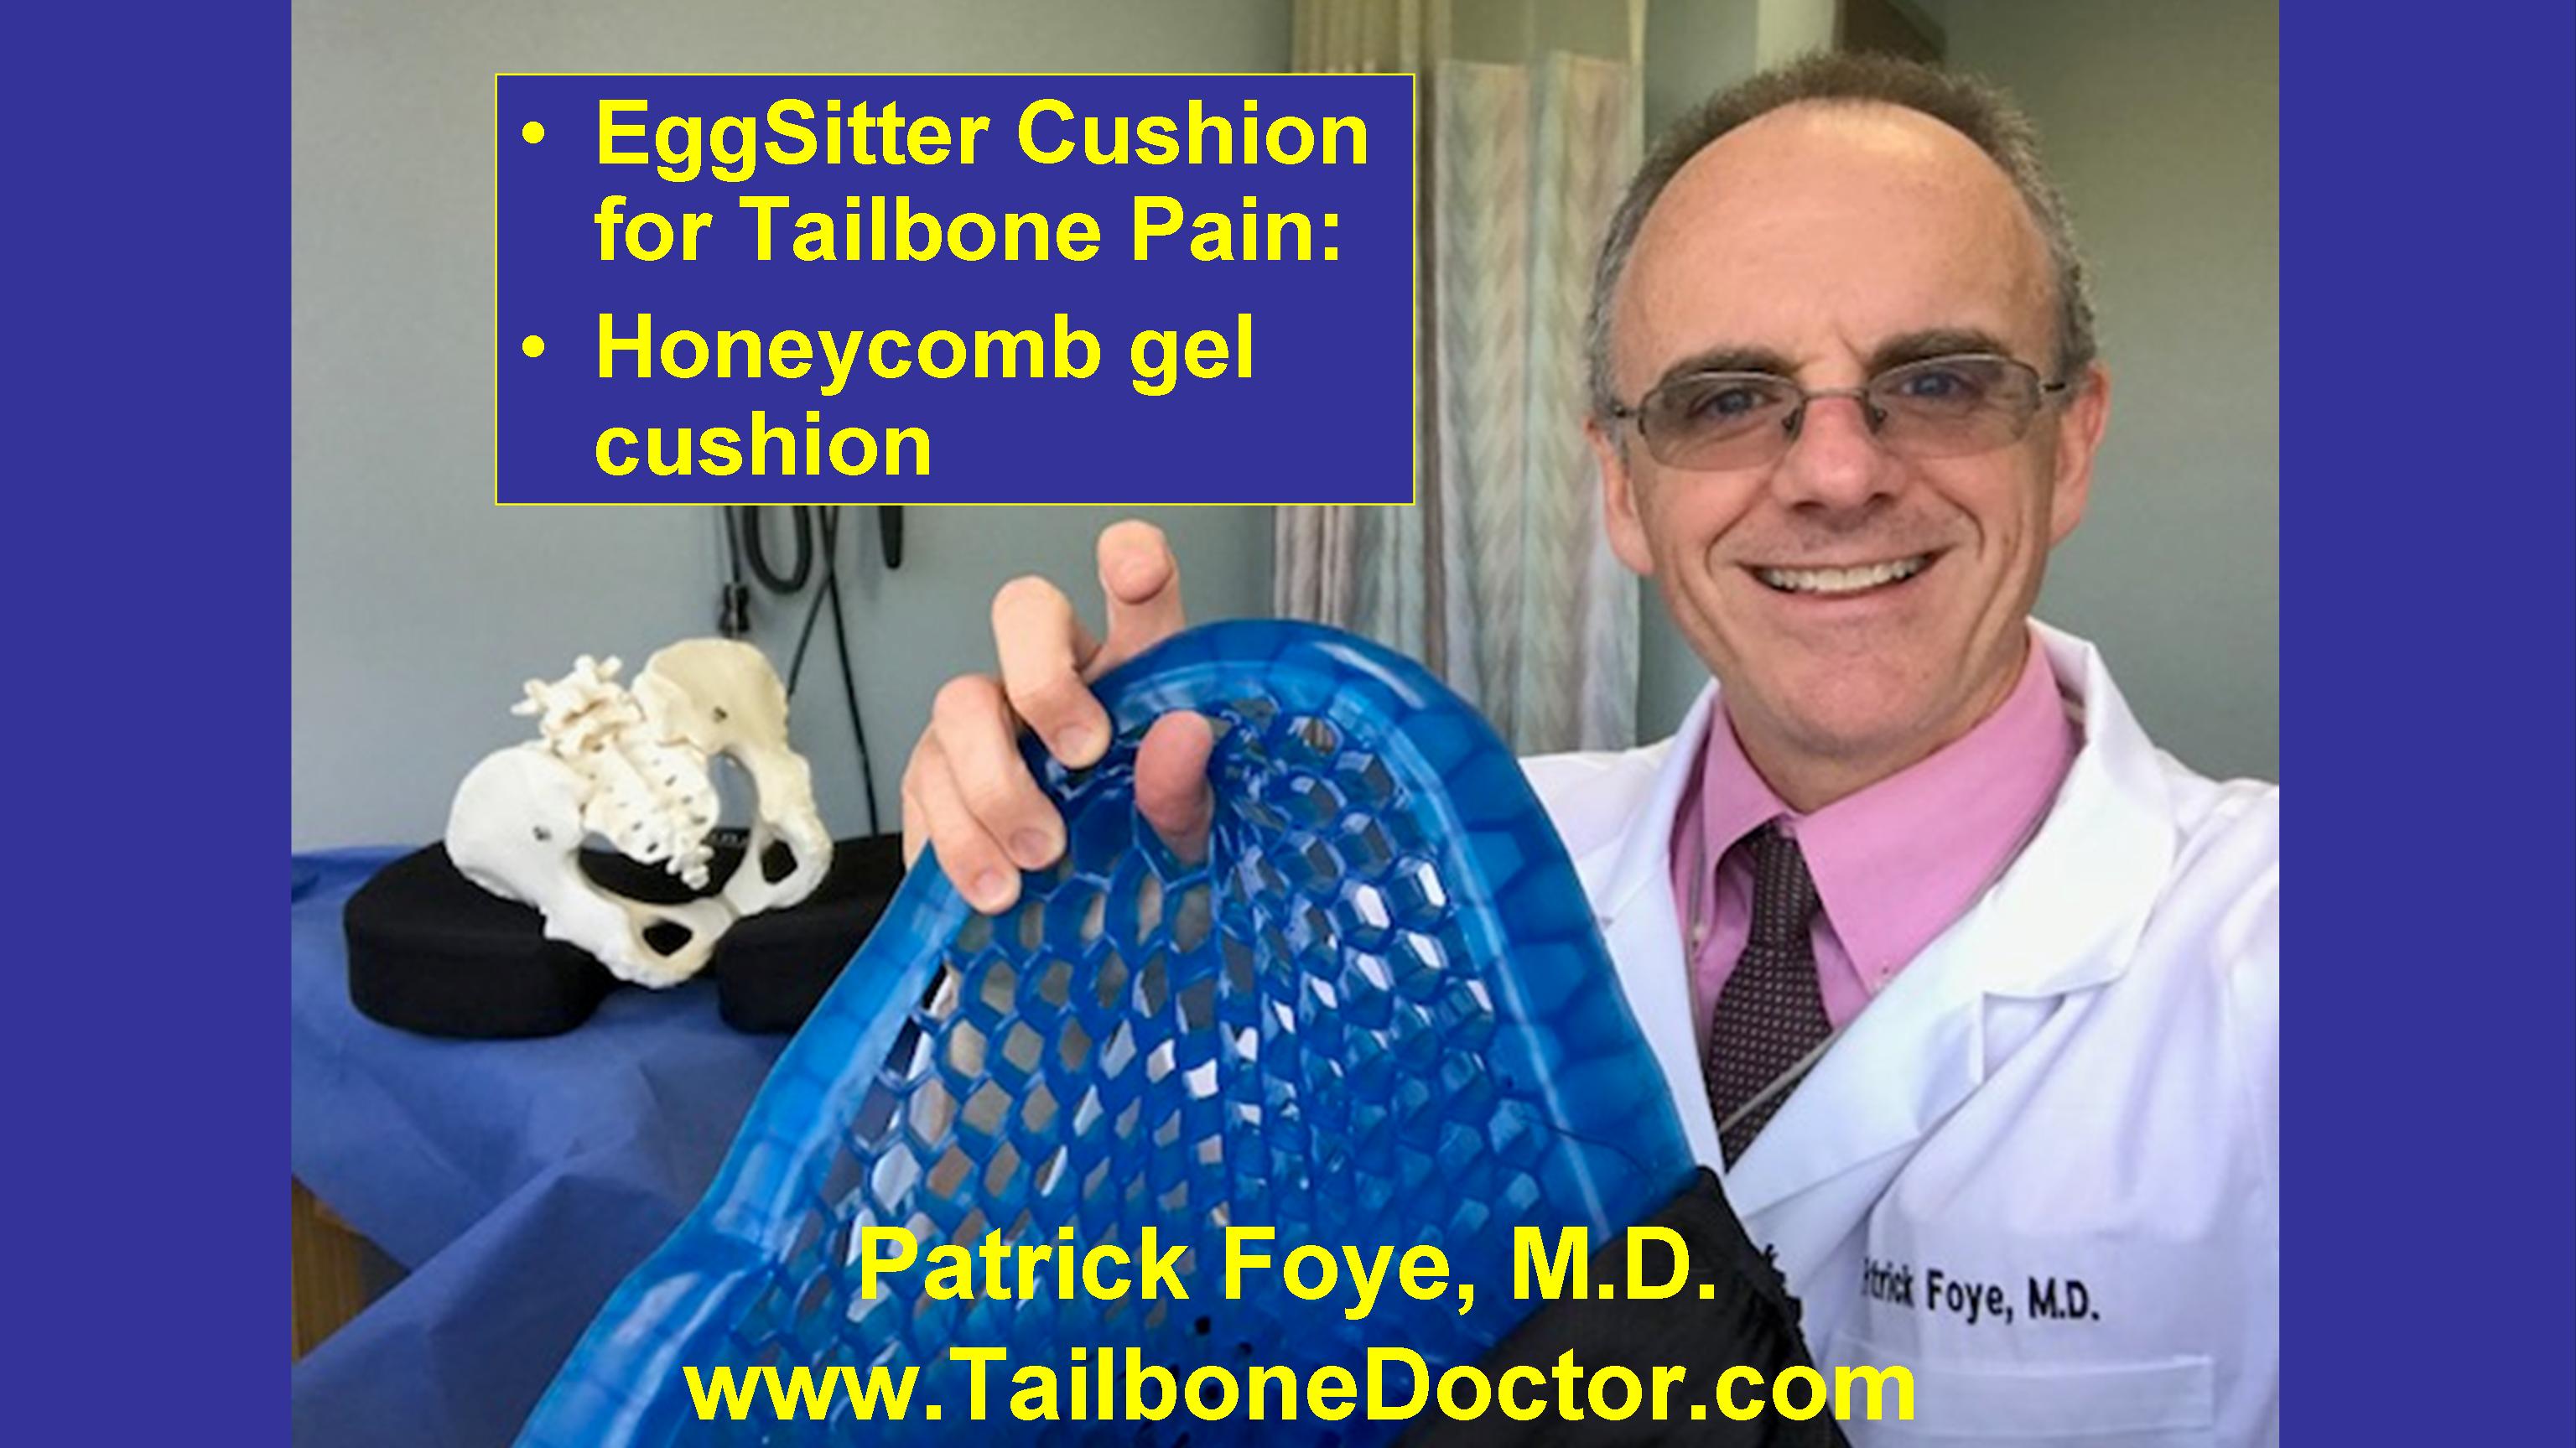 https://tailbonedoctor.com/wp-content/uploads/2018/06/EggSitter-Cushion-for-Tailbone-Pain-Foye-Coccyx-Honeycomb-Gel-Cushion.jpg